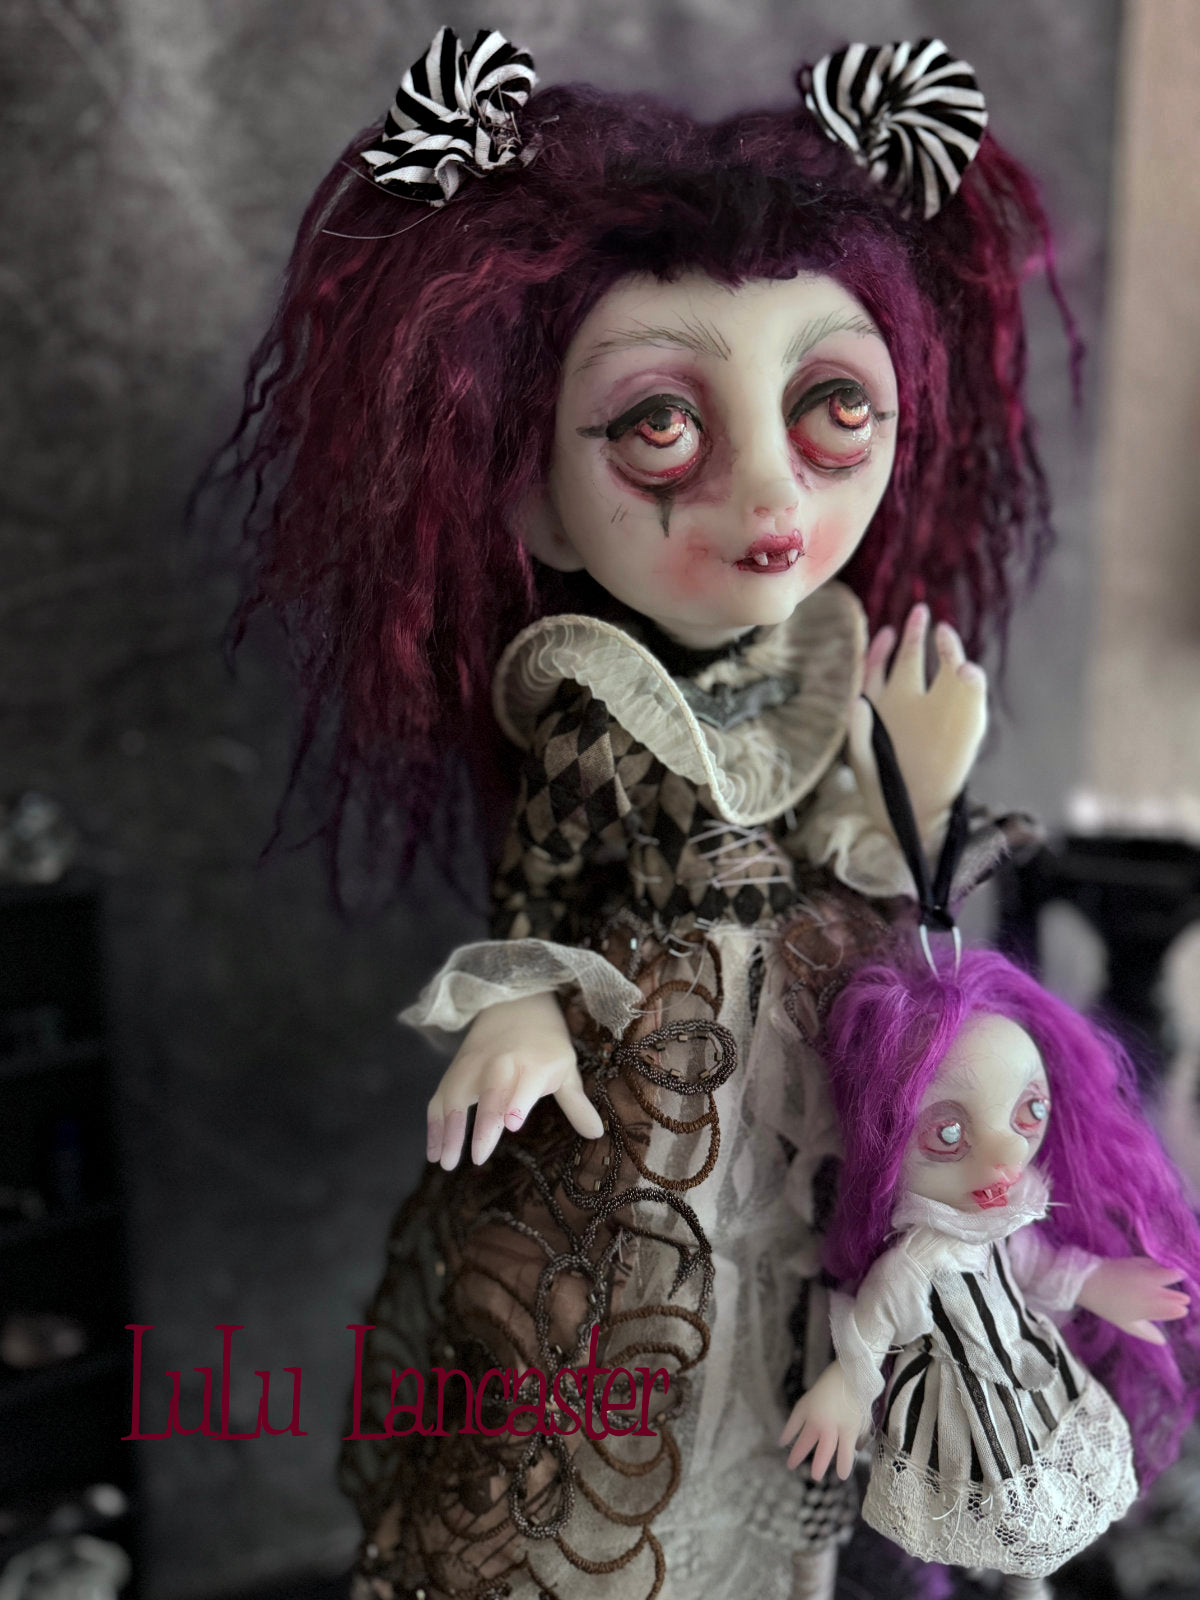 Marguerite the Vampire Original LuLu Lancaster Art Doll